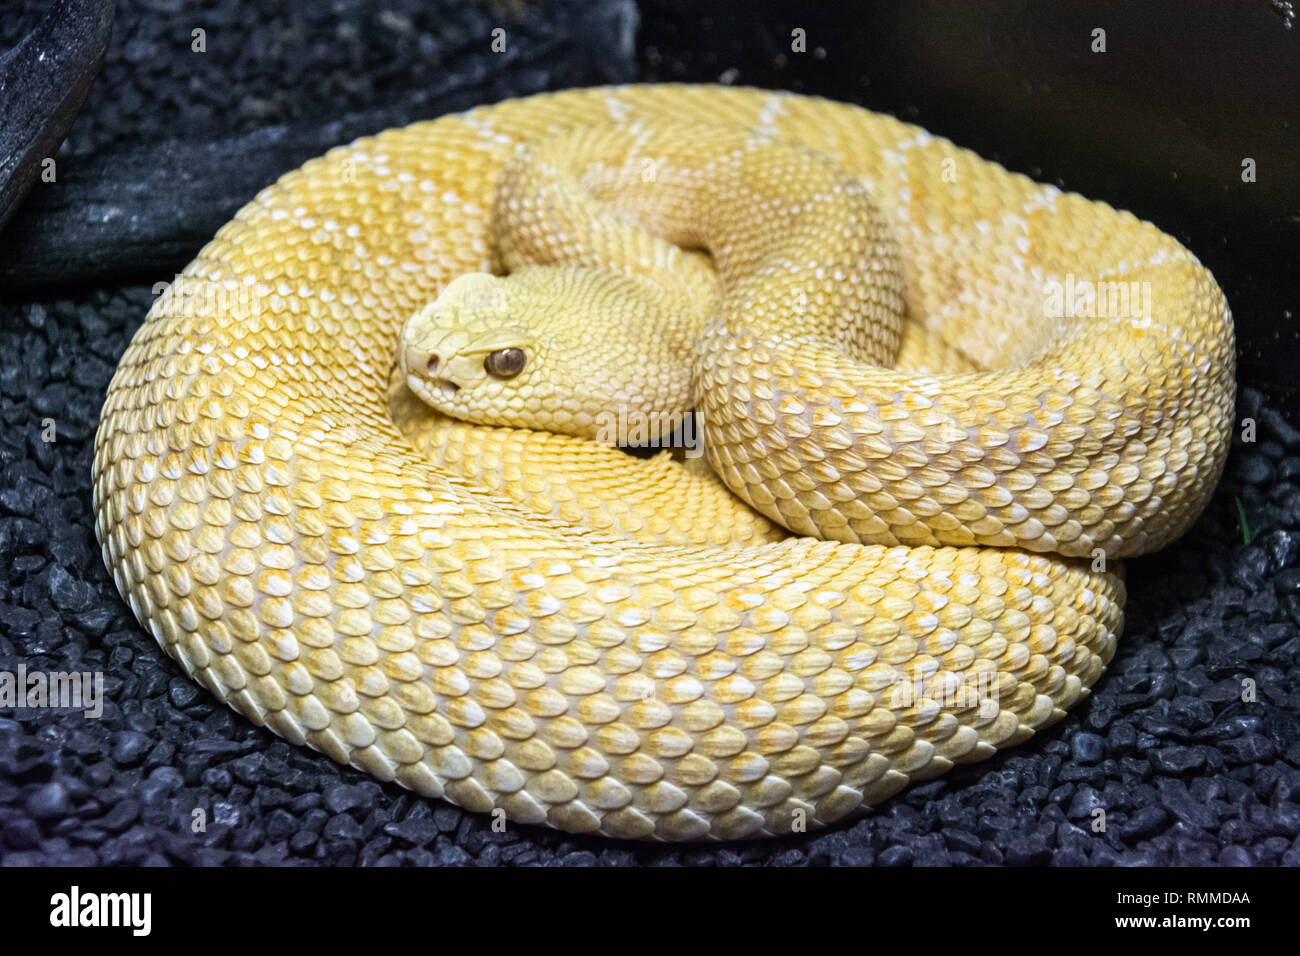 Western Diamondback Rattlesnake (Crotalus atrox) exhibiting amelanistic (albino) color. Stock Photo